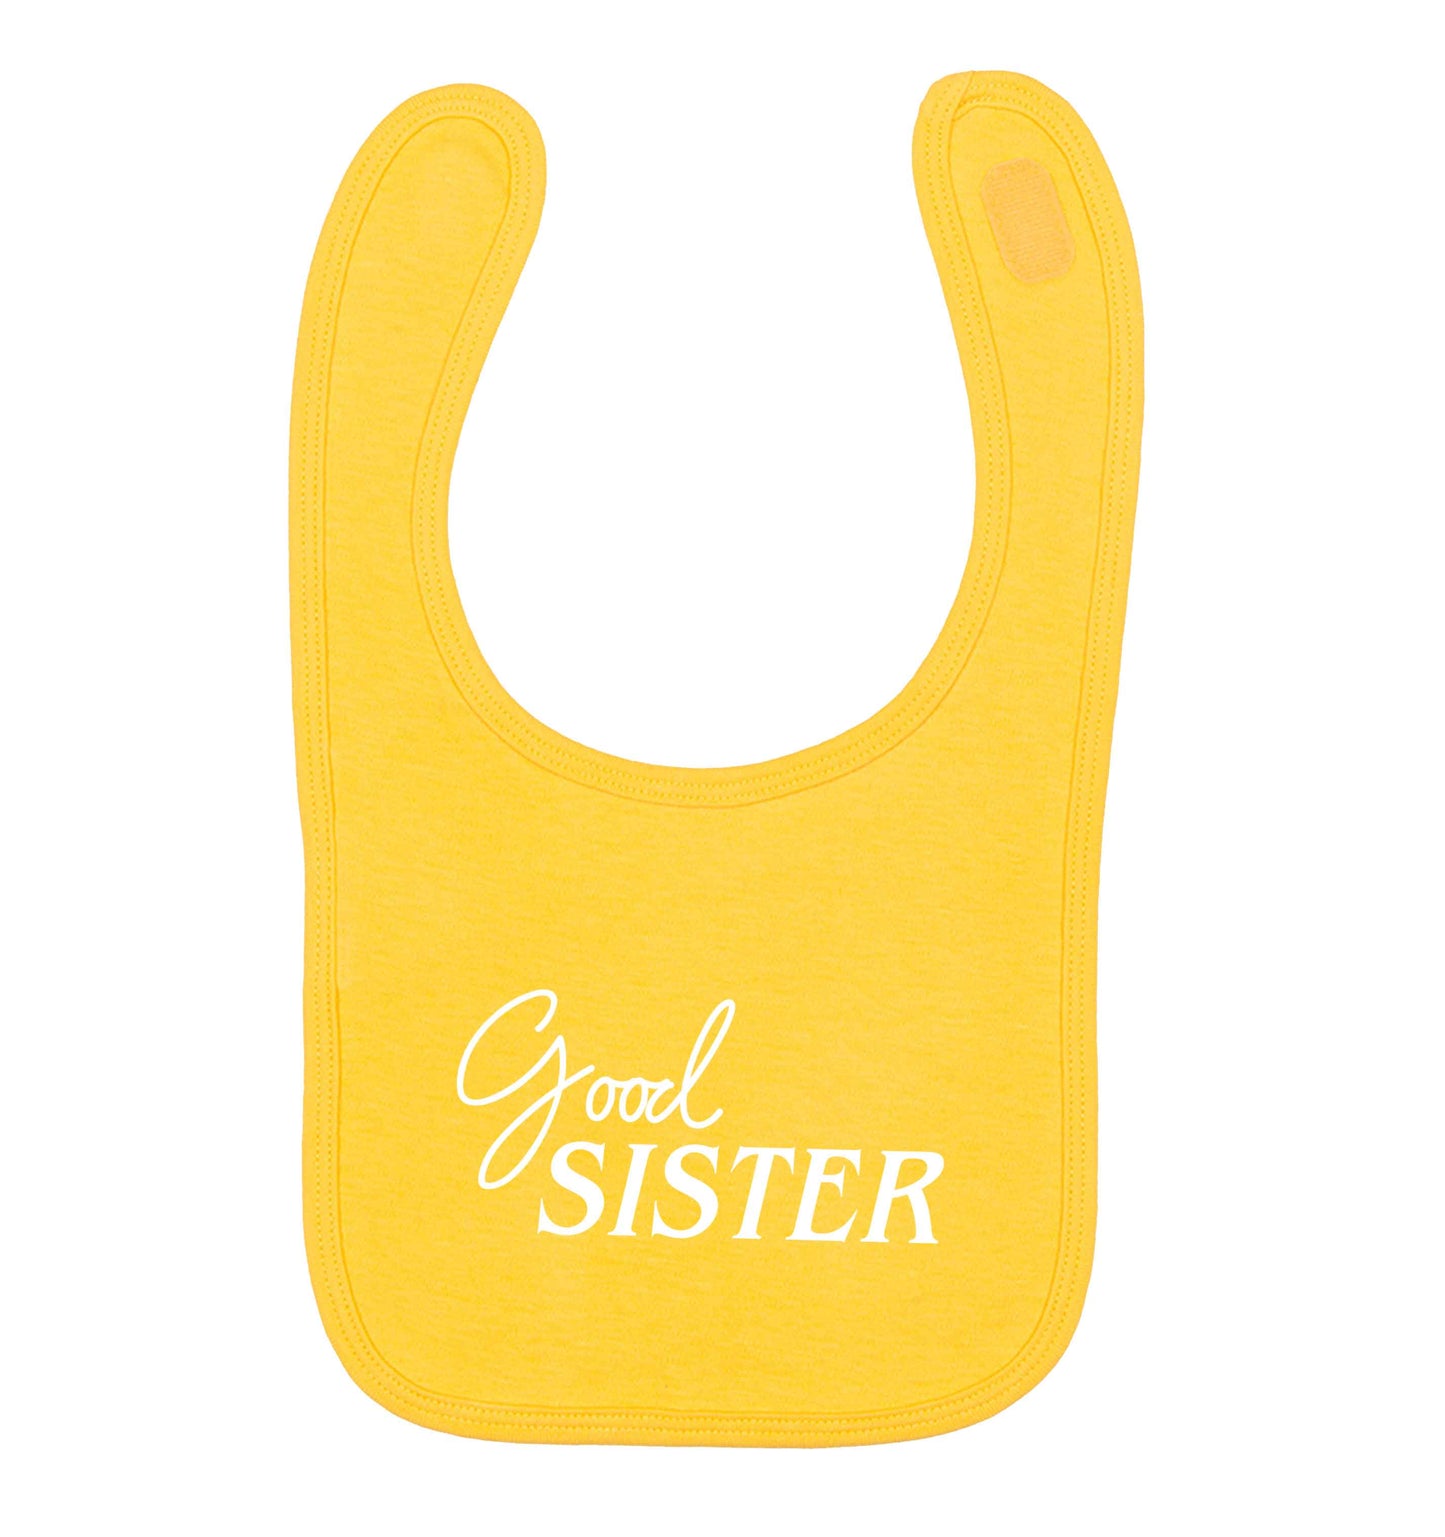 Good sister yellow baby bib